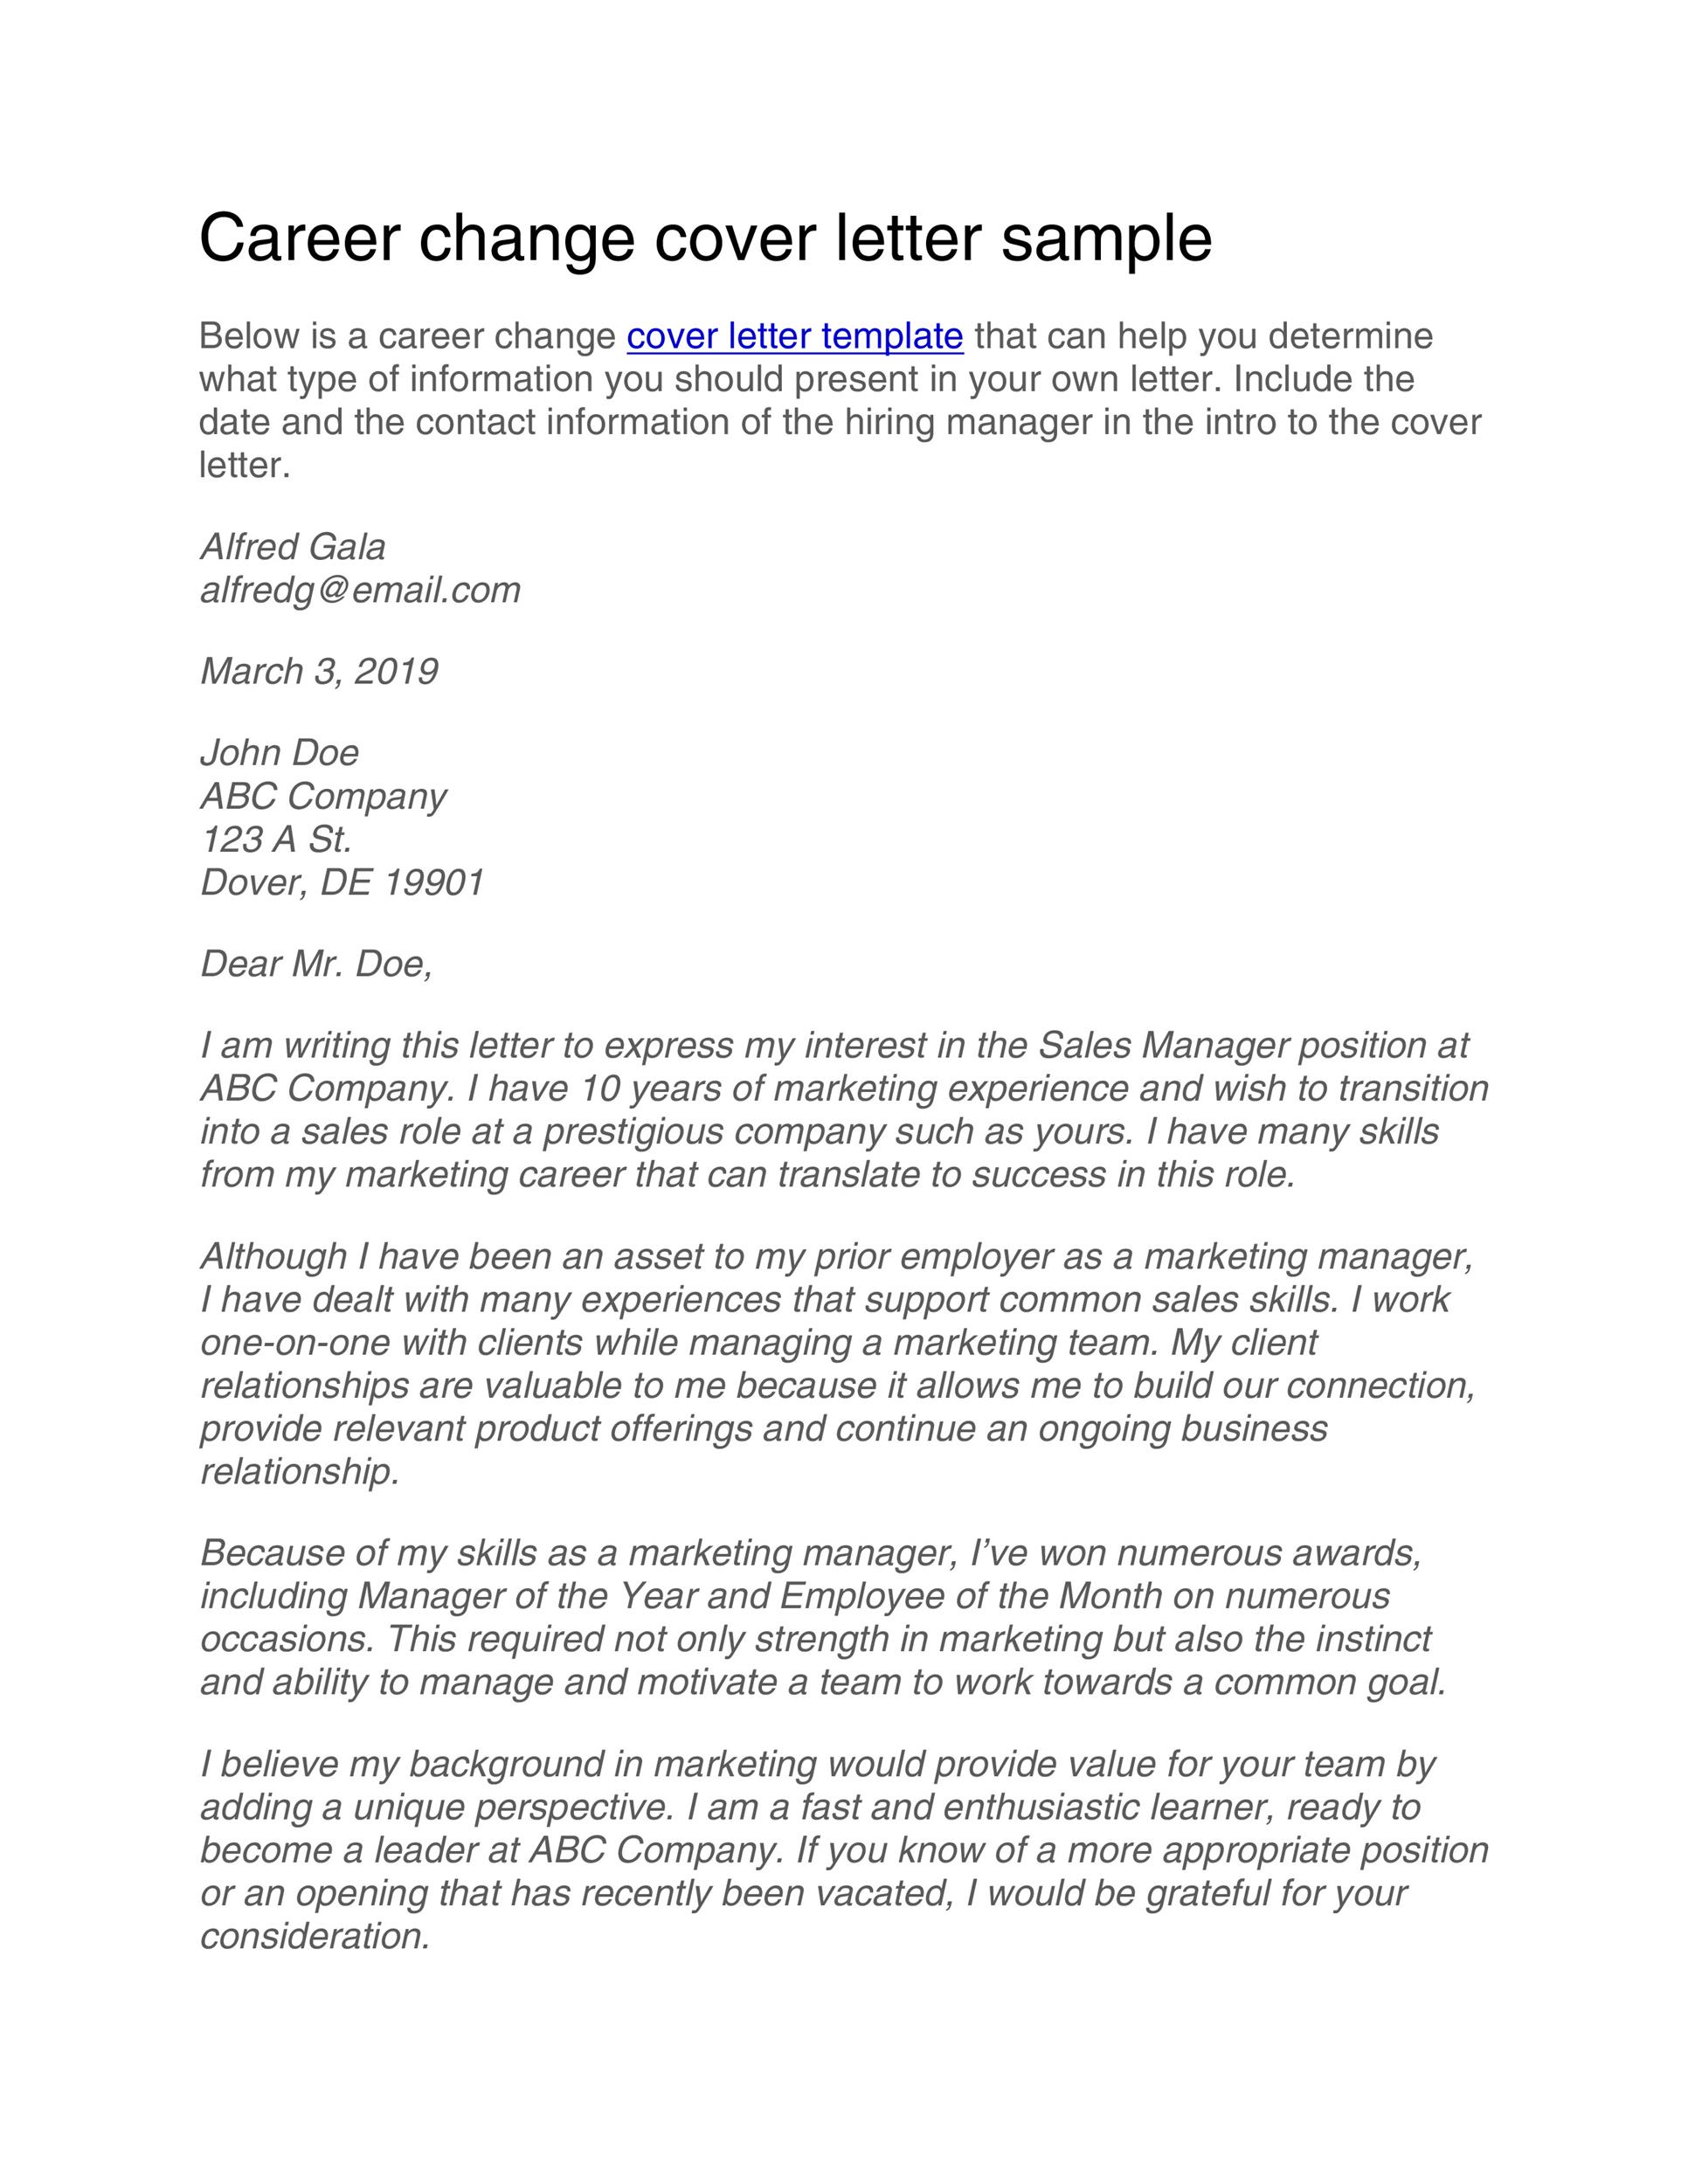 Free career change cover letter 07